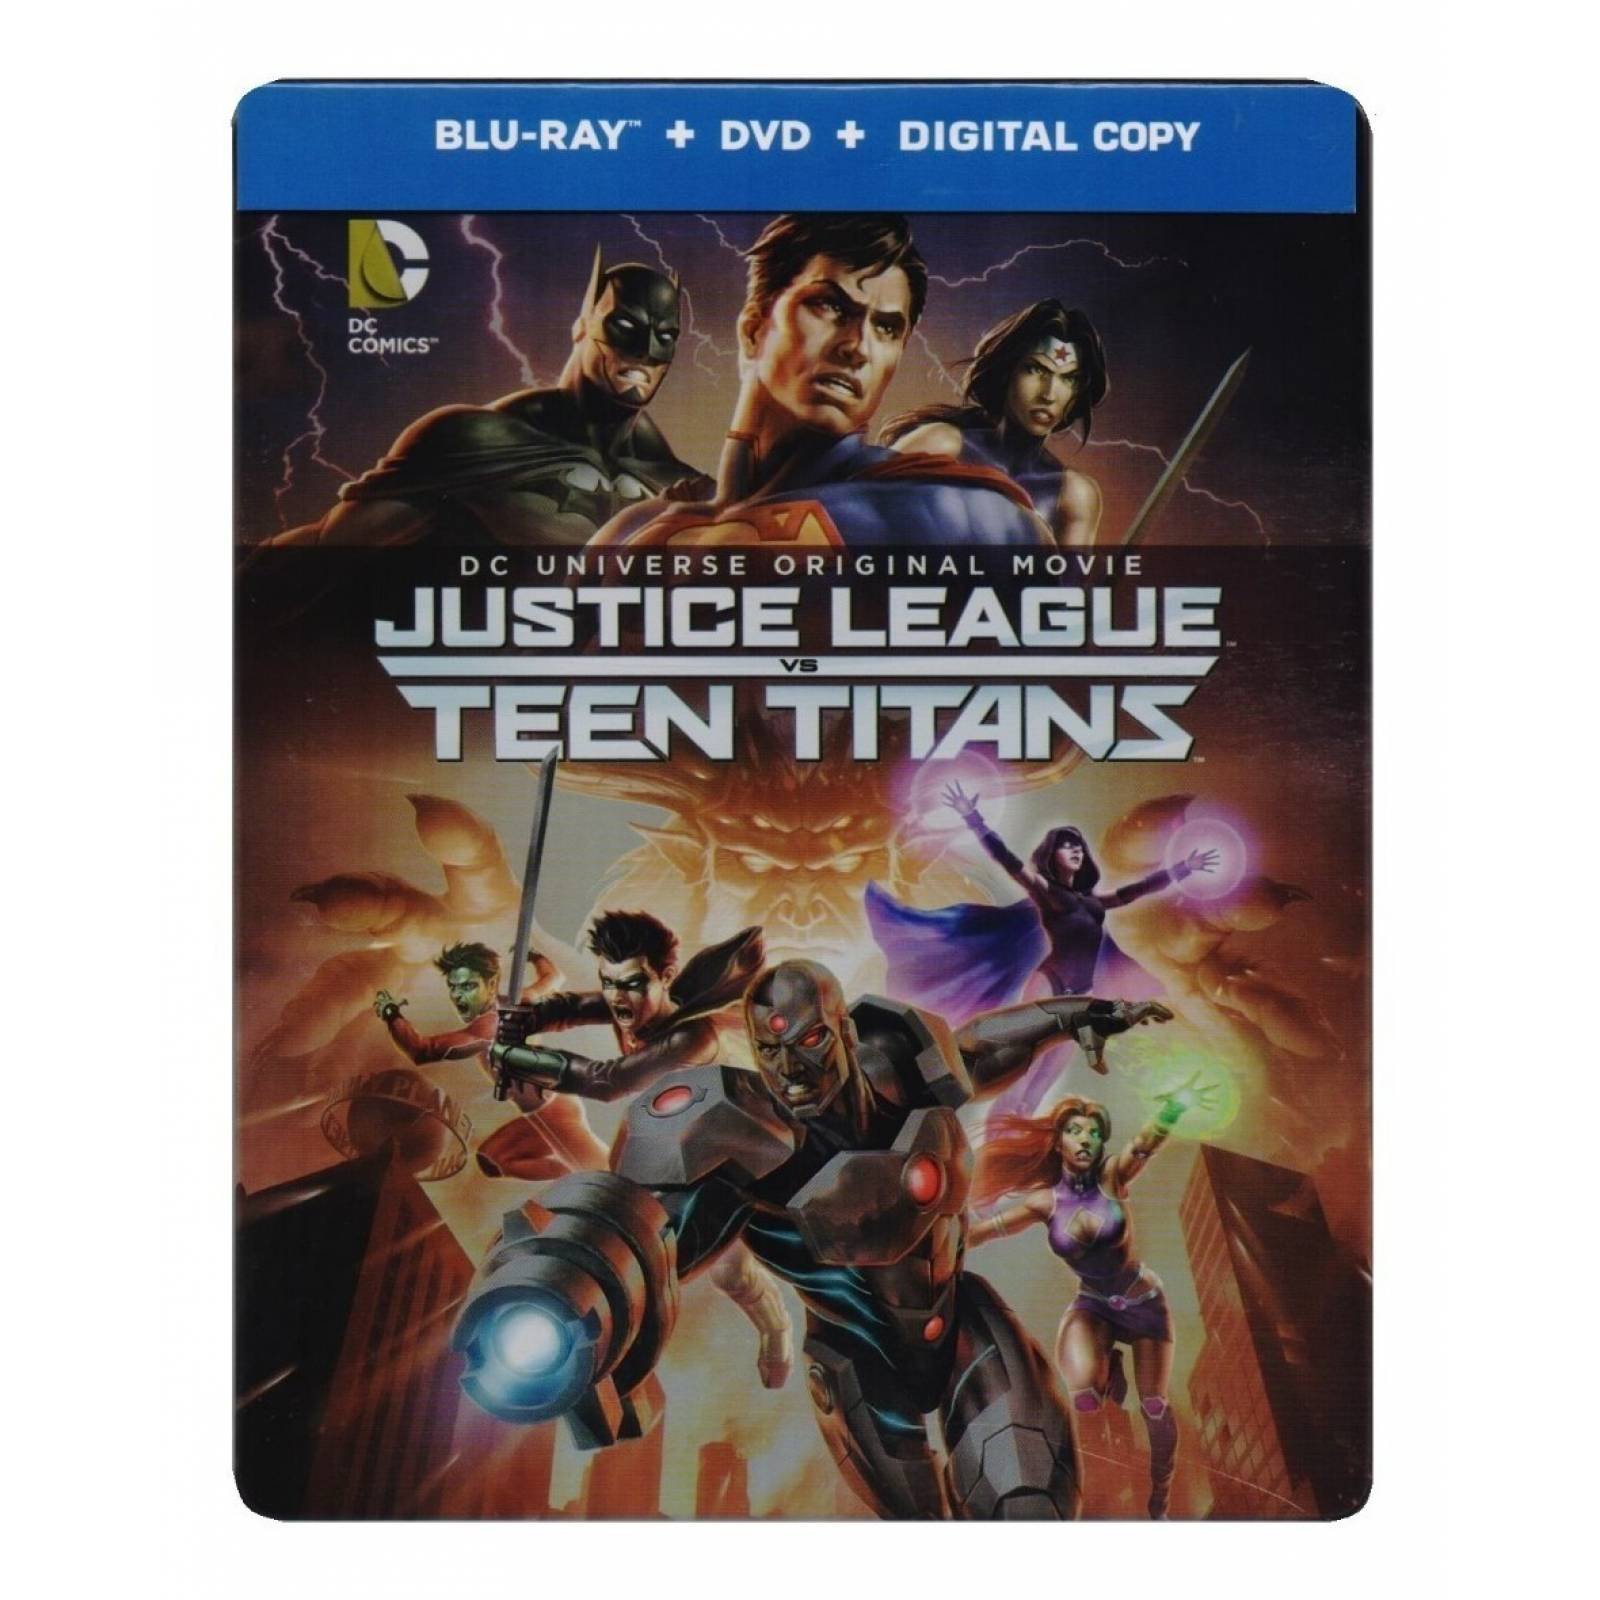 Justice League Vs Teen Titans Steelbook Blu-ray + Dvd